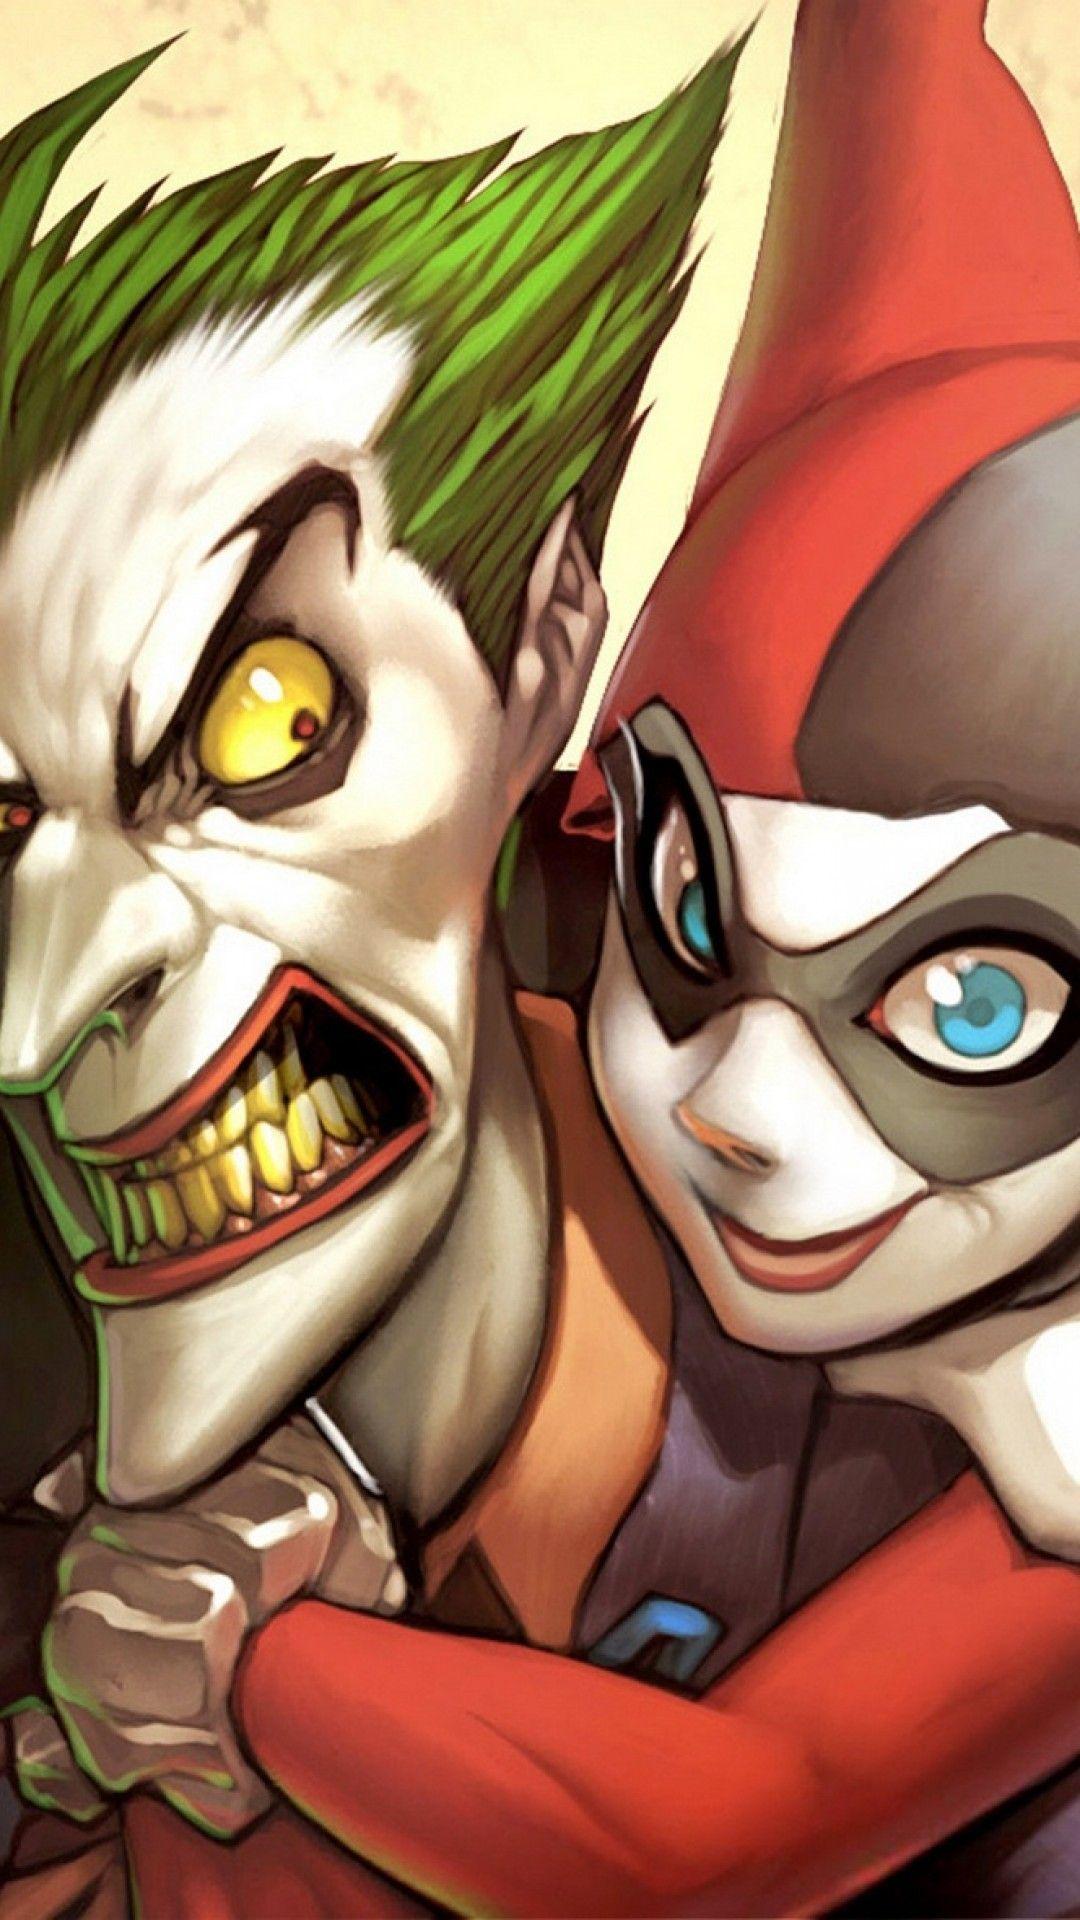  Joker  and Harley  Quinn  Wallpapers  Top Free Joker  and 